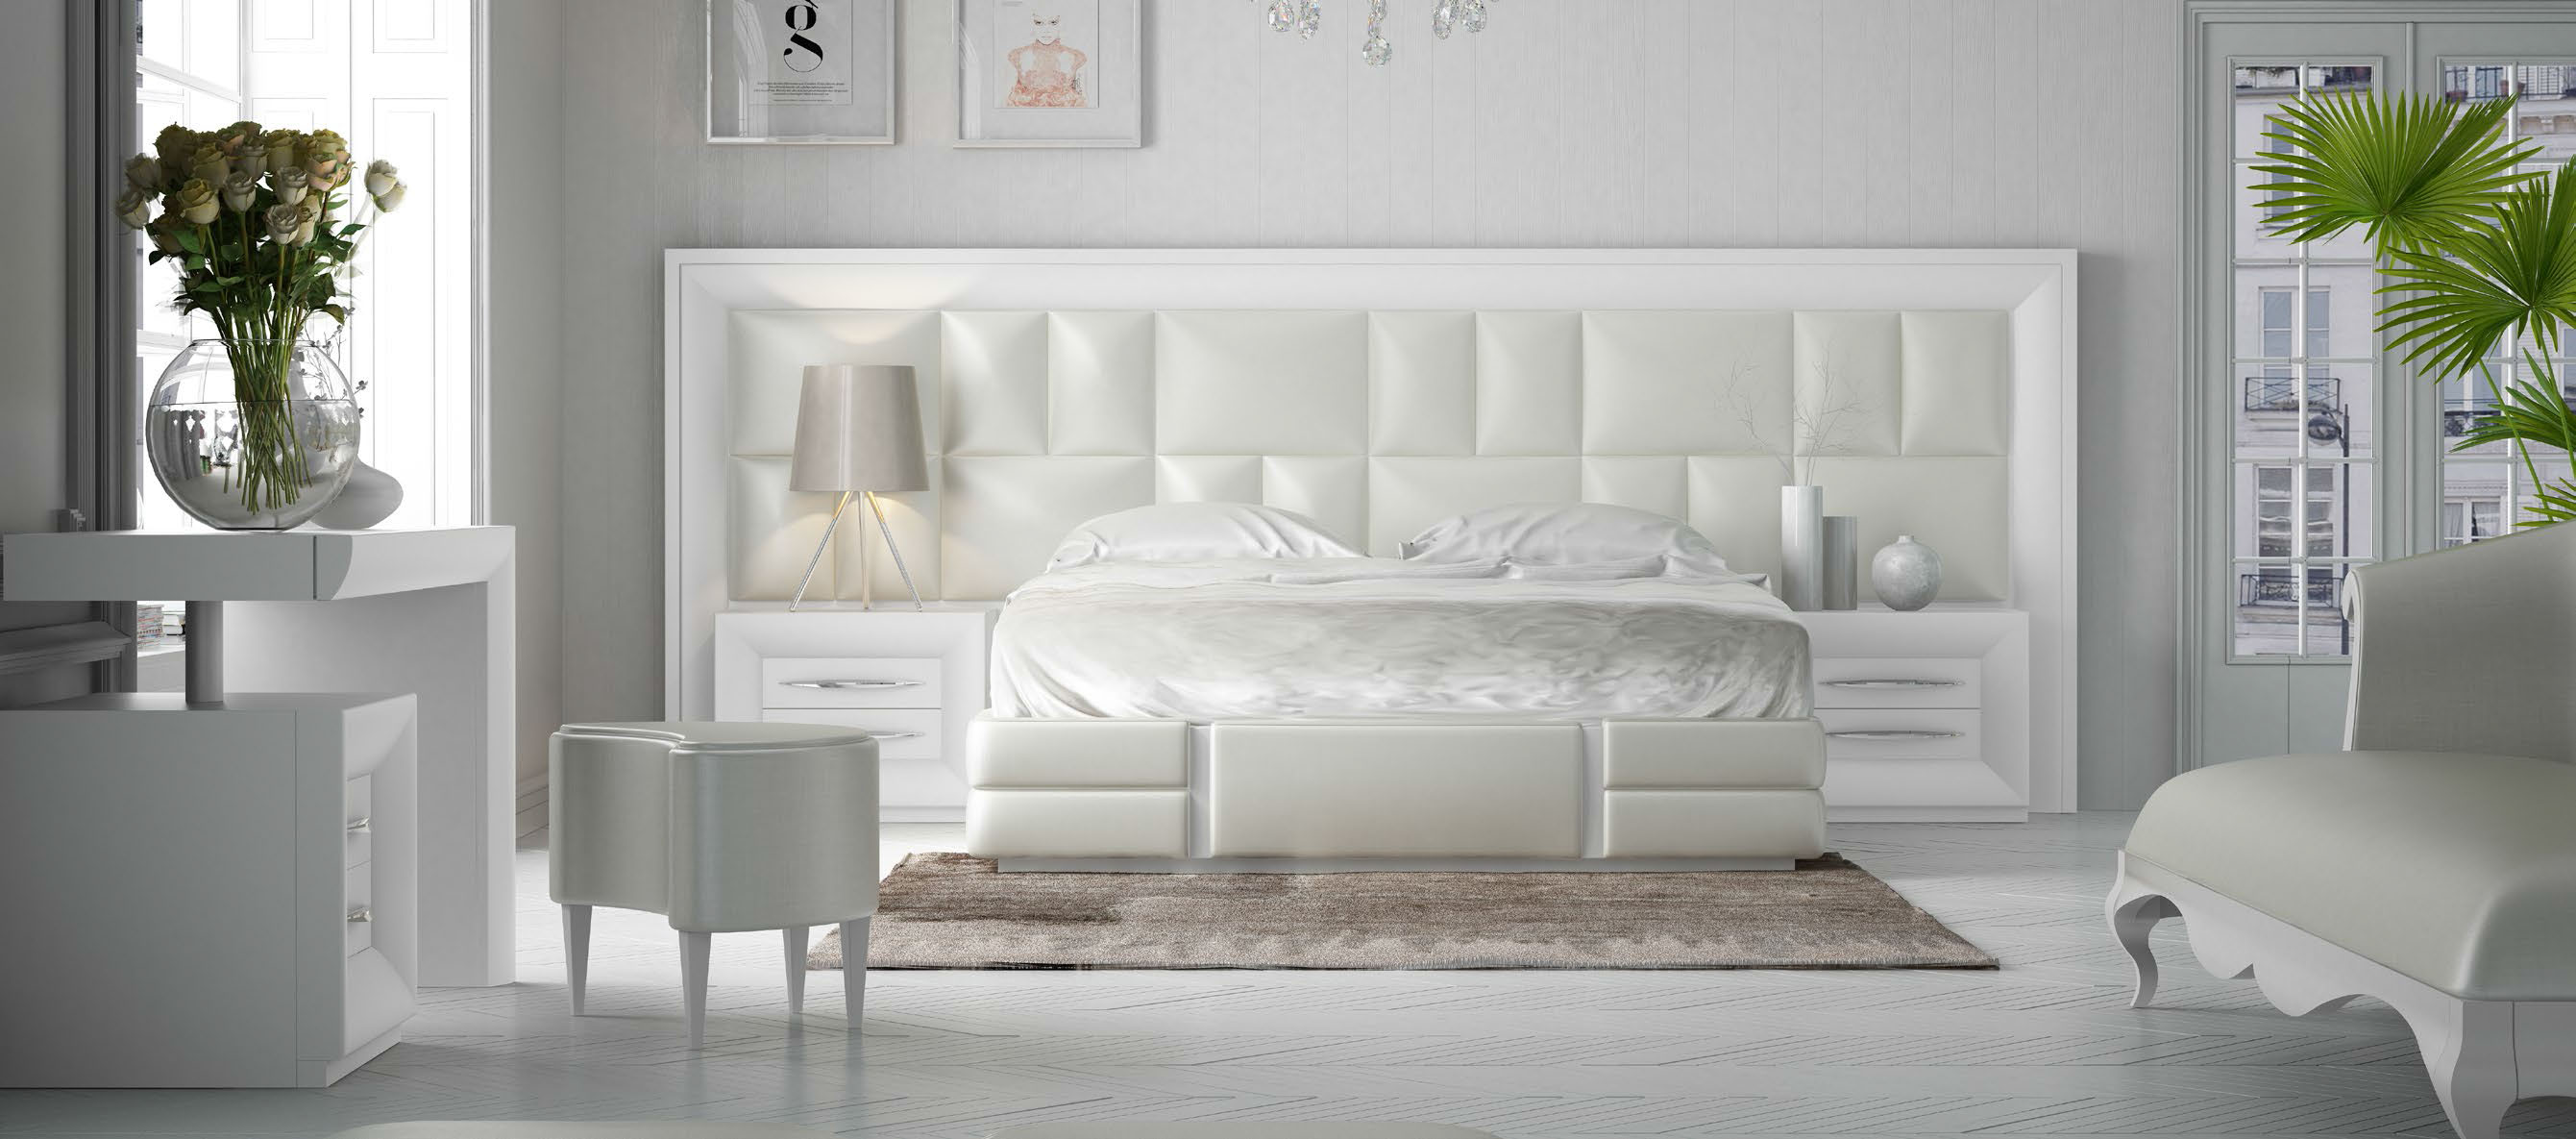 Brands Franco Furniture Bedrooms vol1, Spain DOR 114